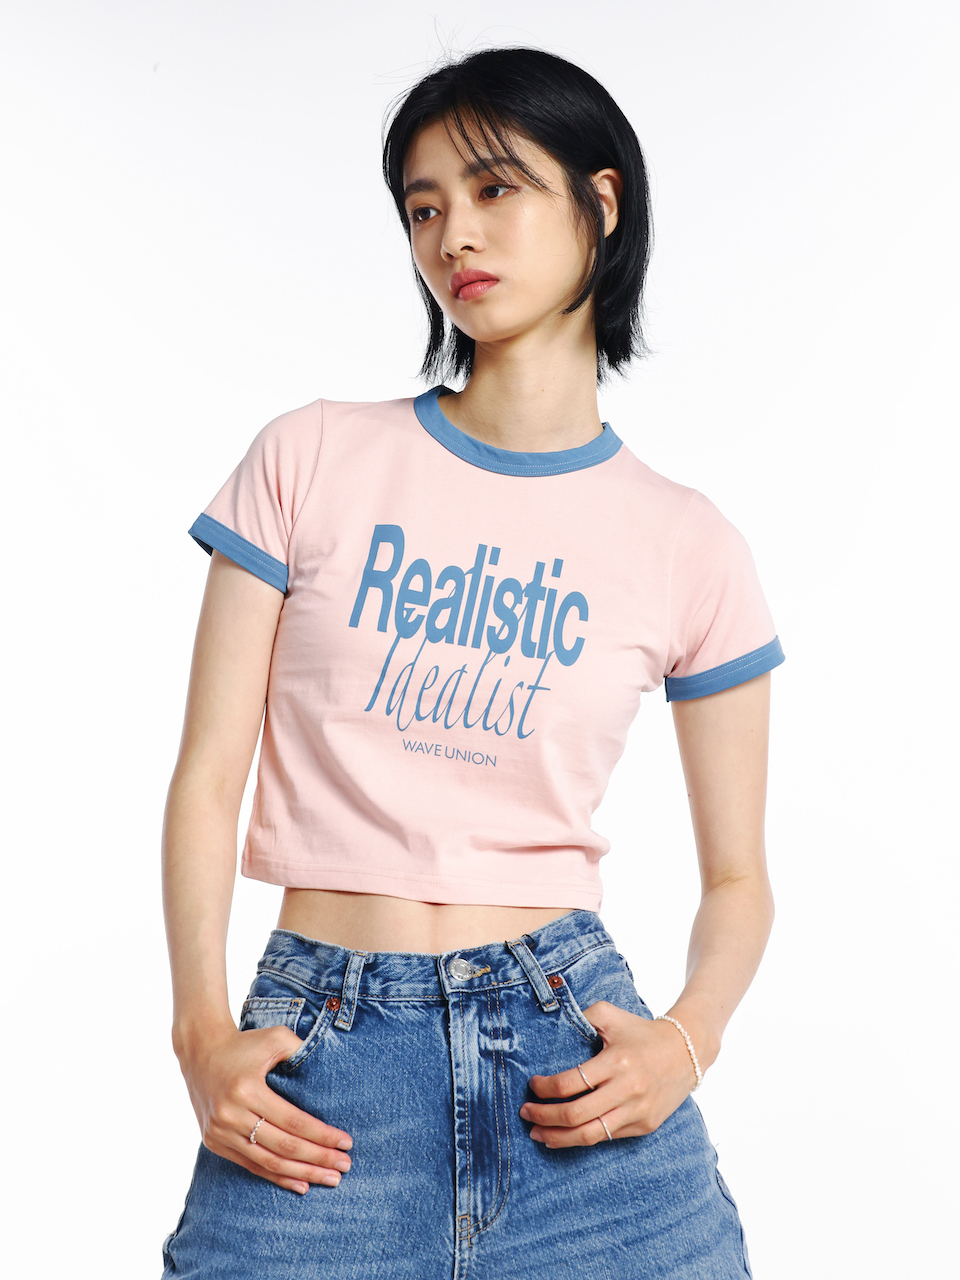 Realistic idealist  Ringer Tight T-shirt pink